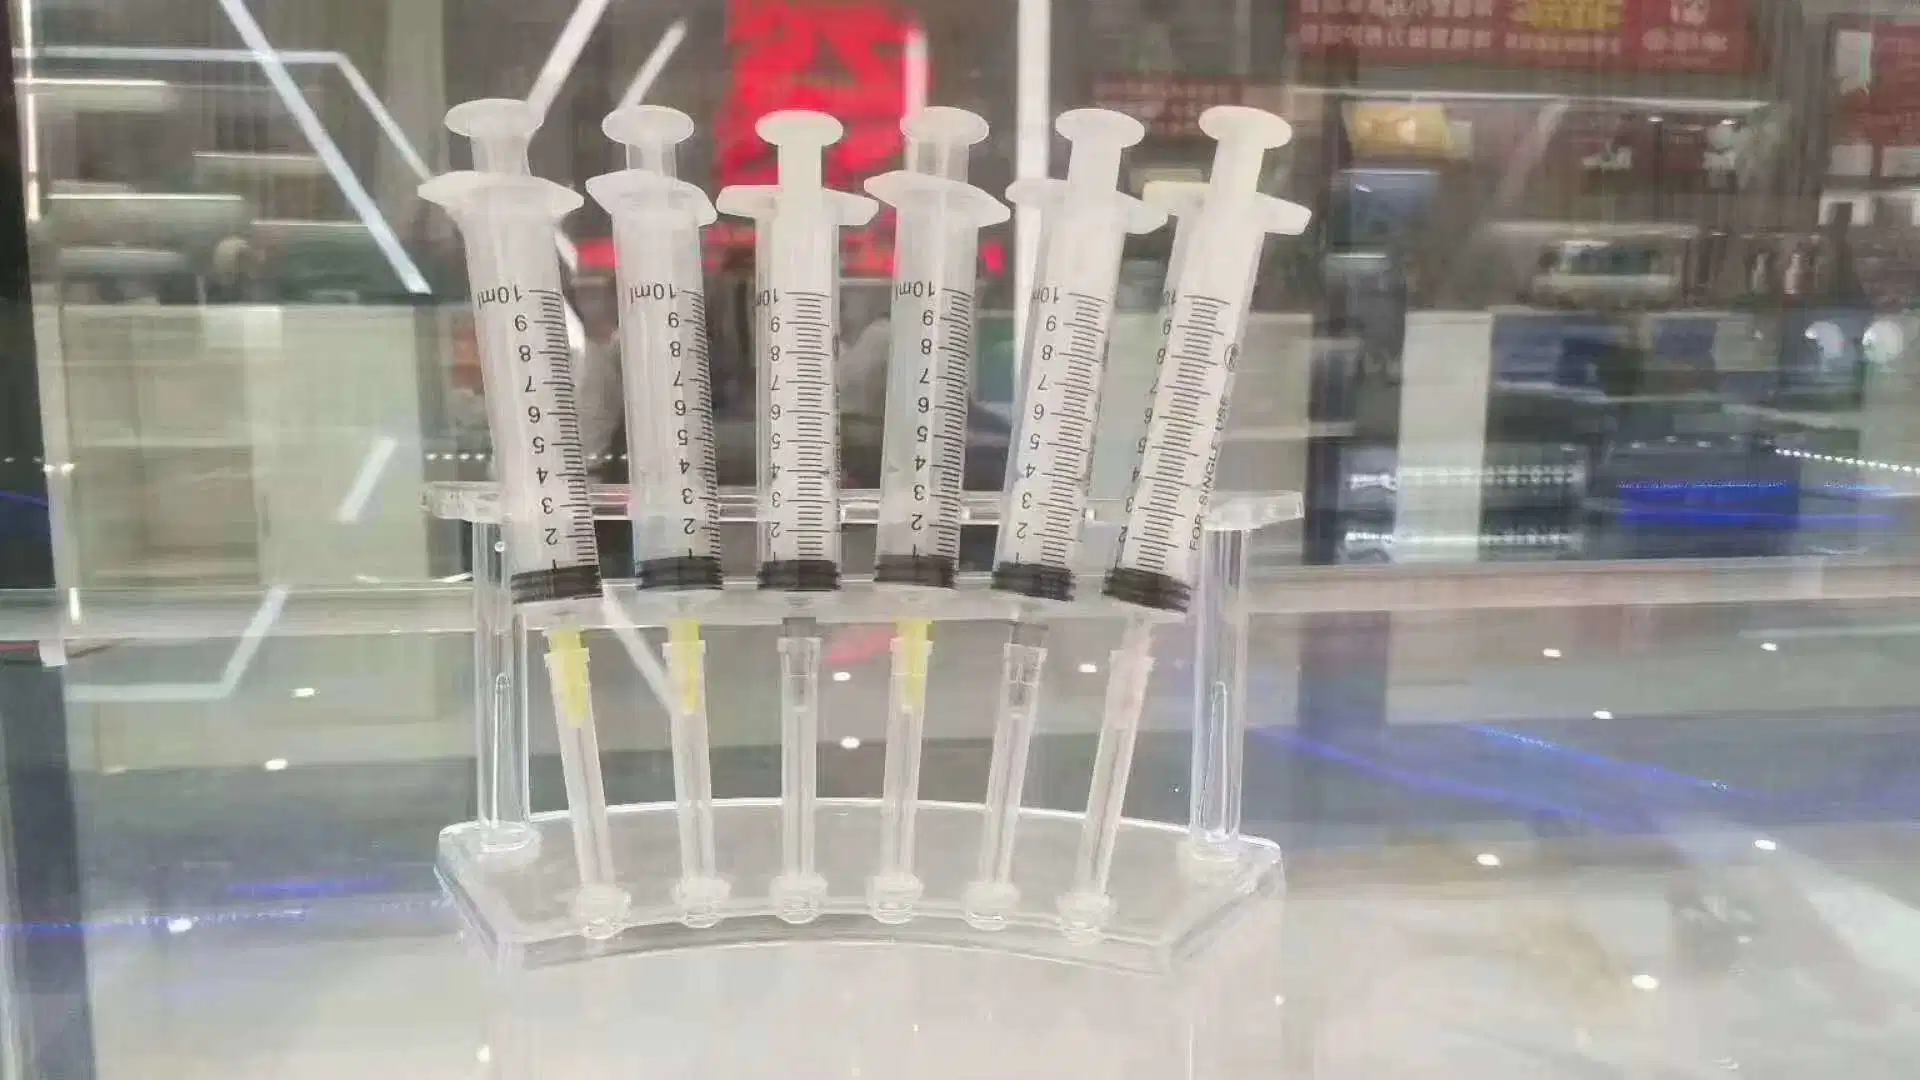 Disposable Medical Plastic Luer Lock Syringe with Needle